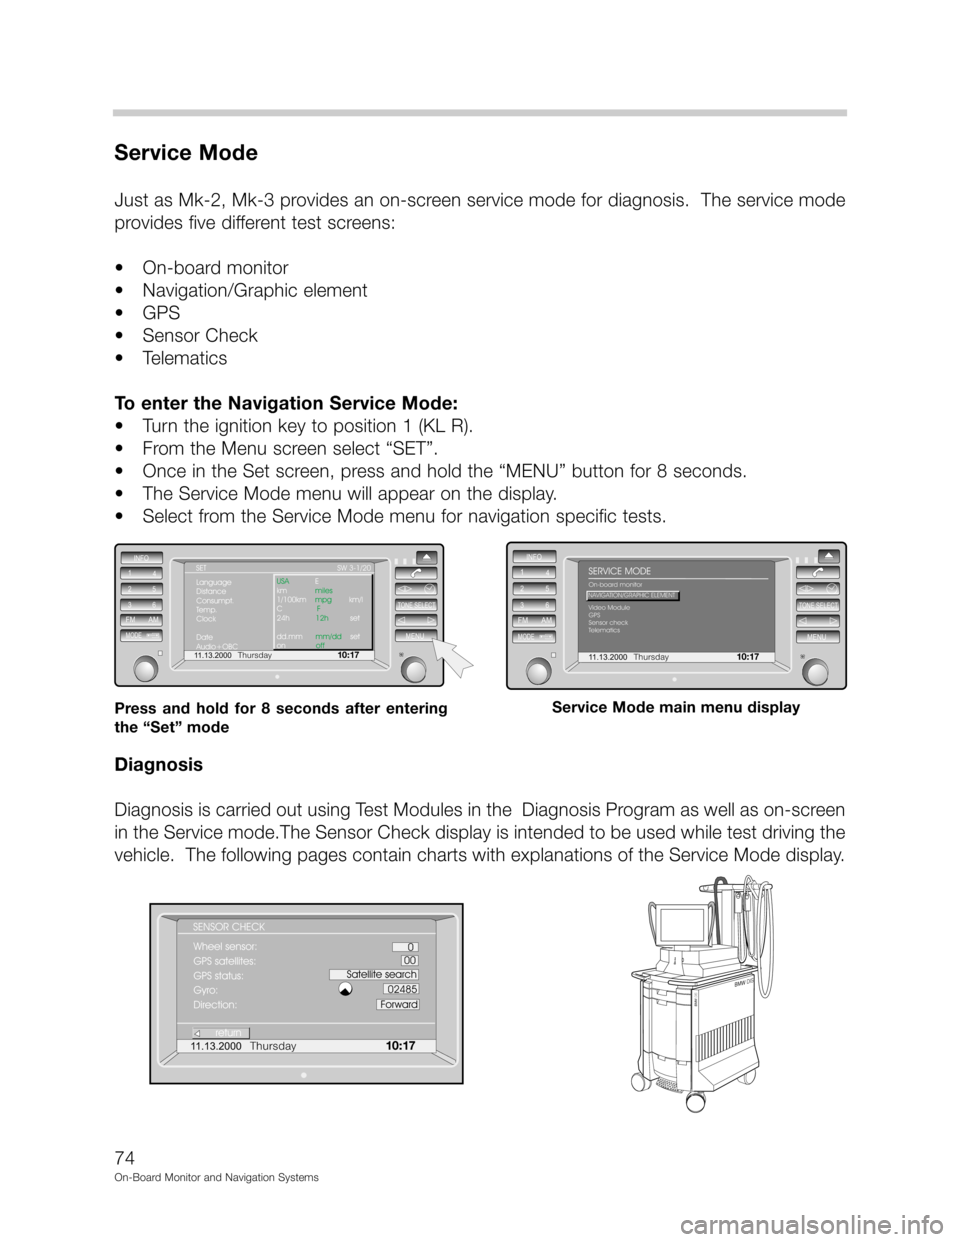 BMW X5 1999 E53 On Board Monitor System Workshop Manual ,:



"&
(	
, 	
R969.
&


&	
#&	

&&


 
	

